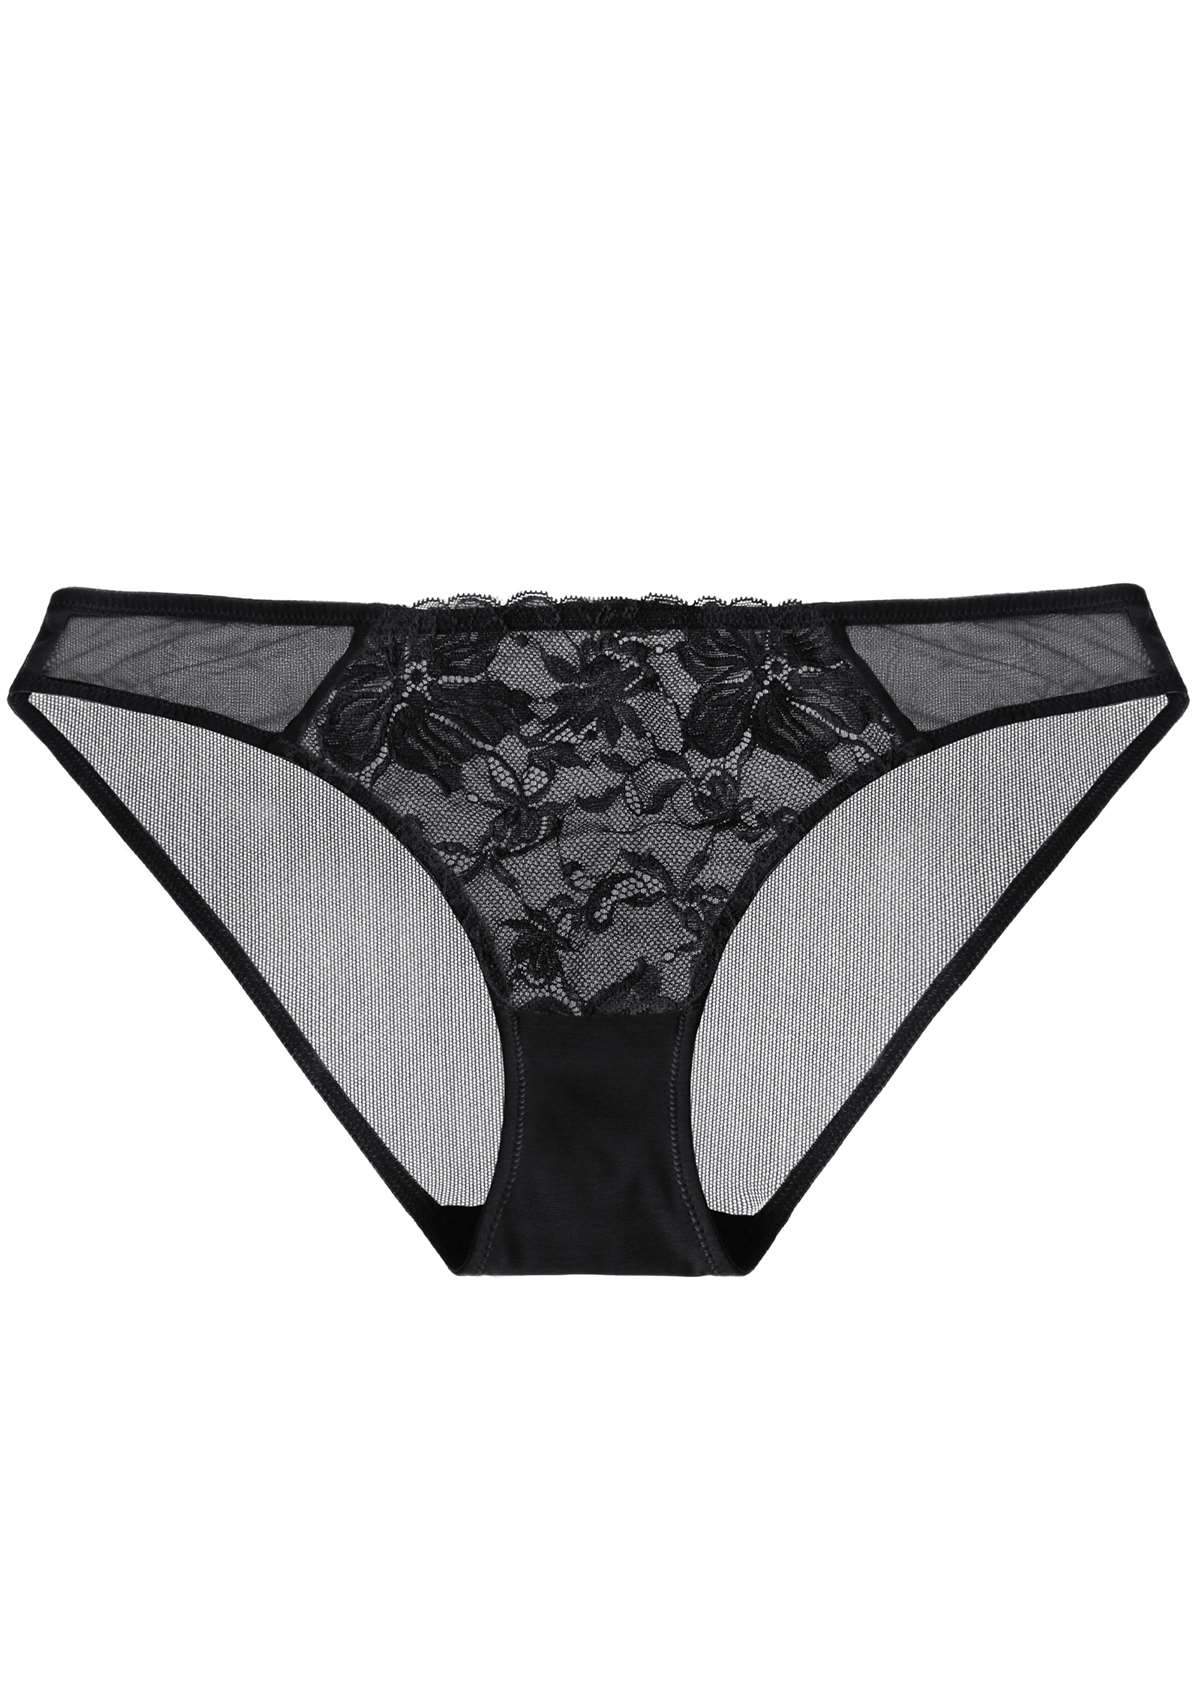 HSIA Pretty In Petals Sexy Lightweight Breathable Lace Underwear  - XXL / High-Rise Brief / Black